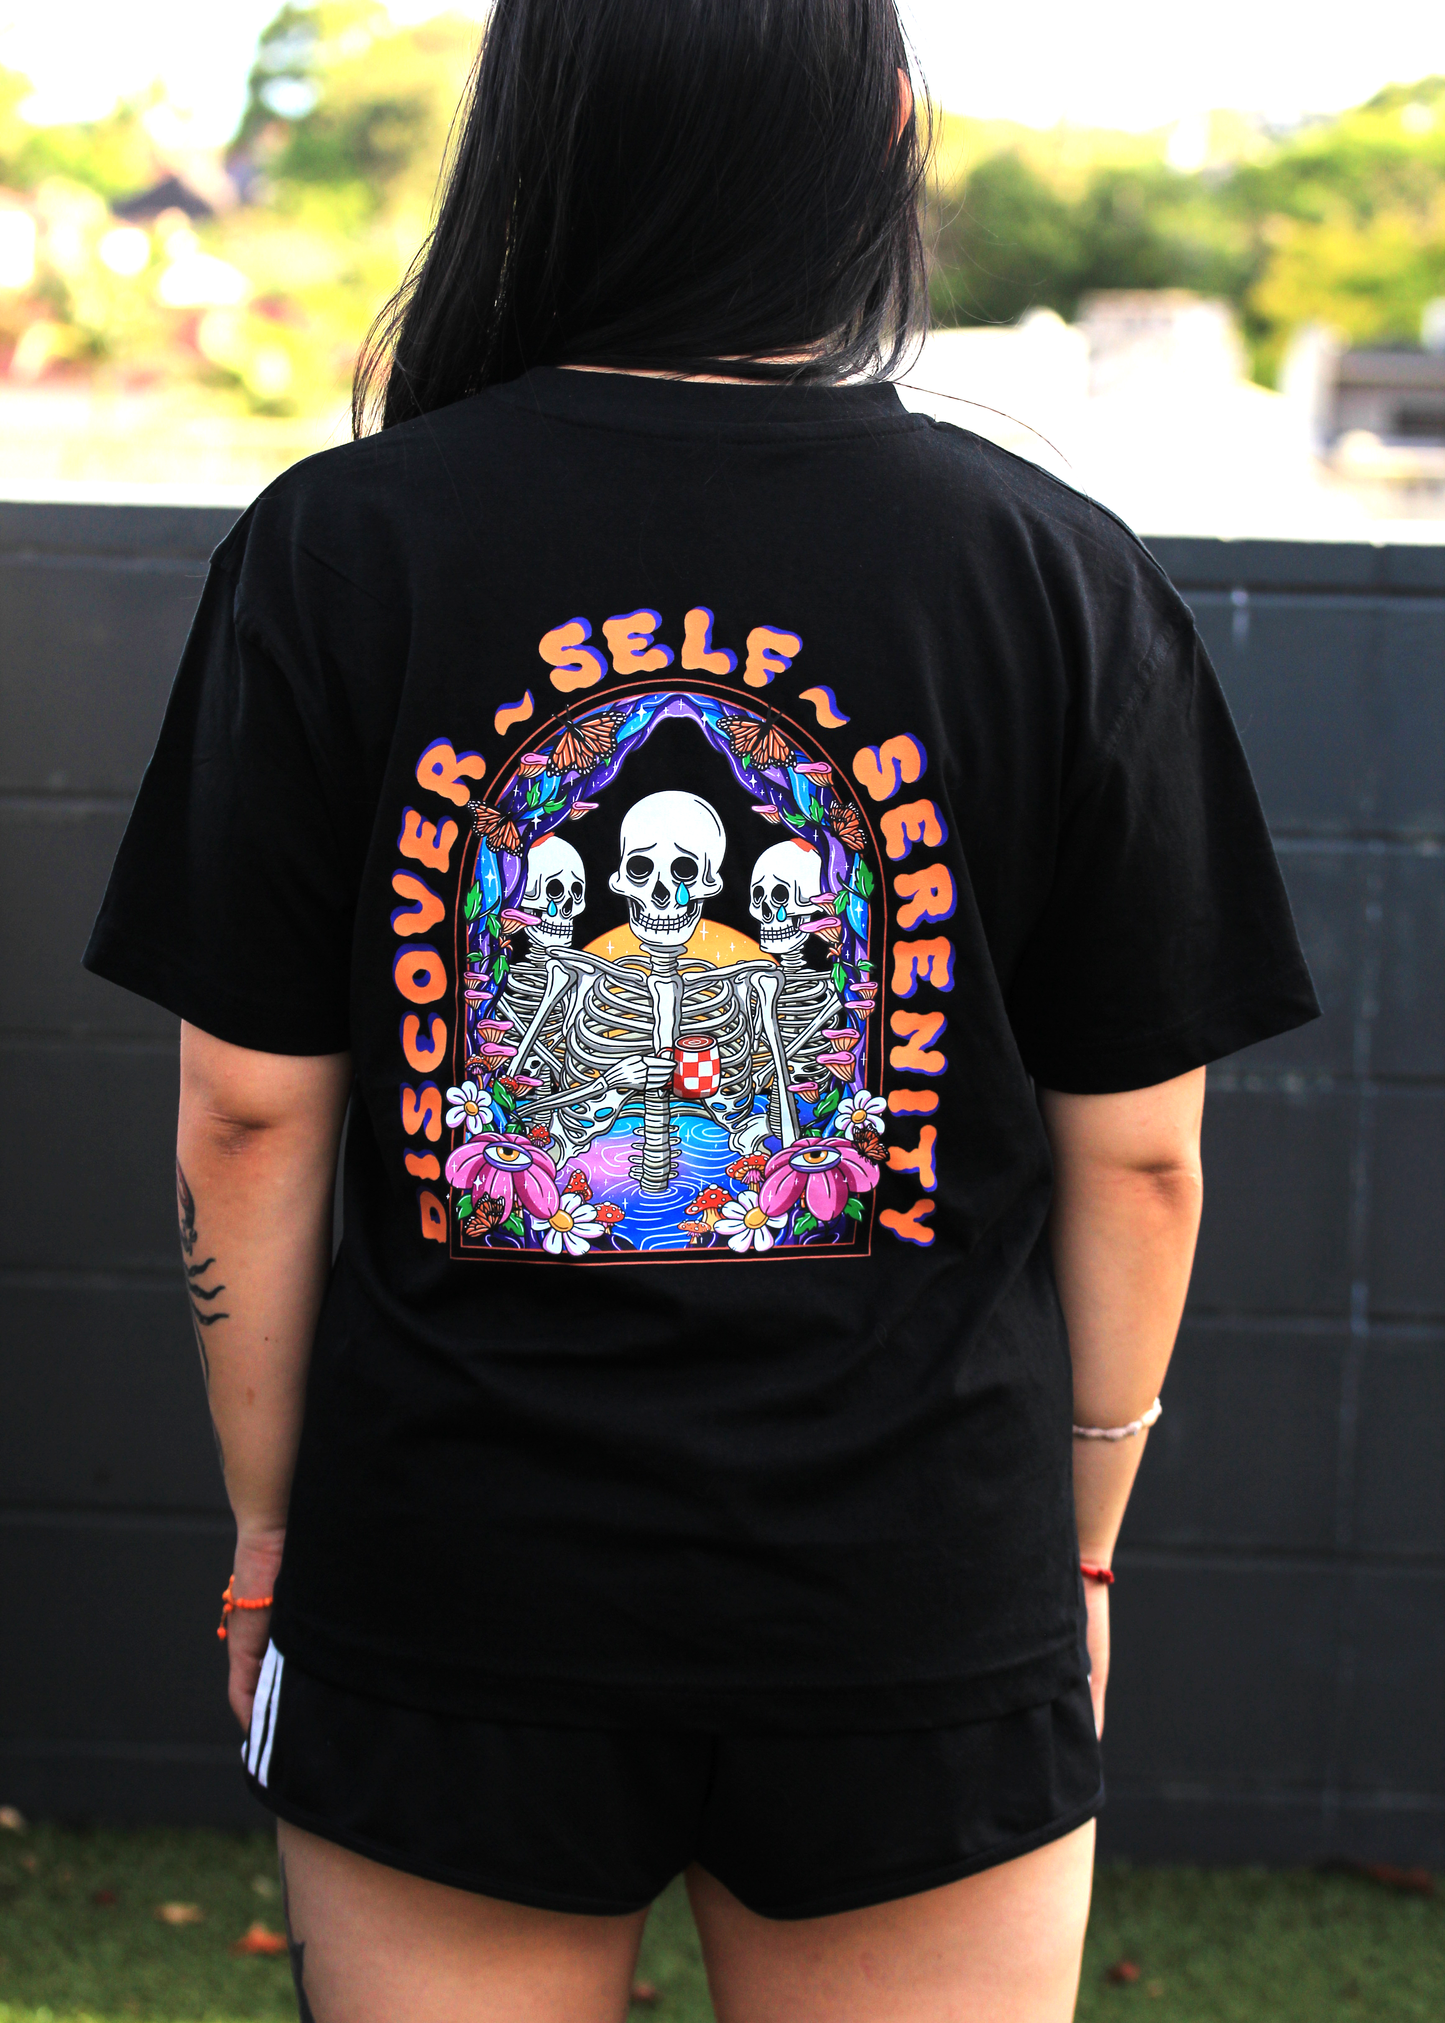 Discover Self Serenity Short Sleeve Black Tshirt